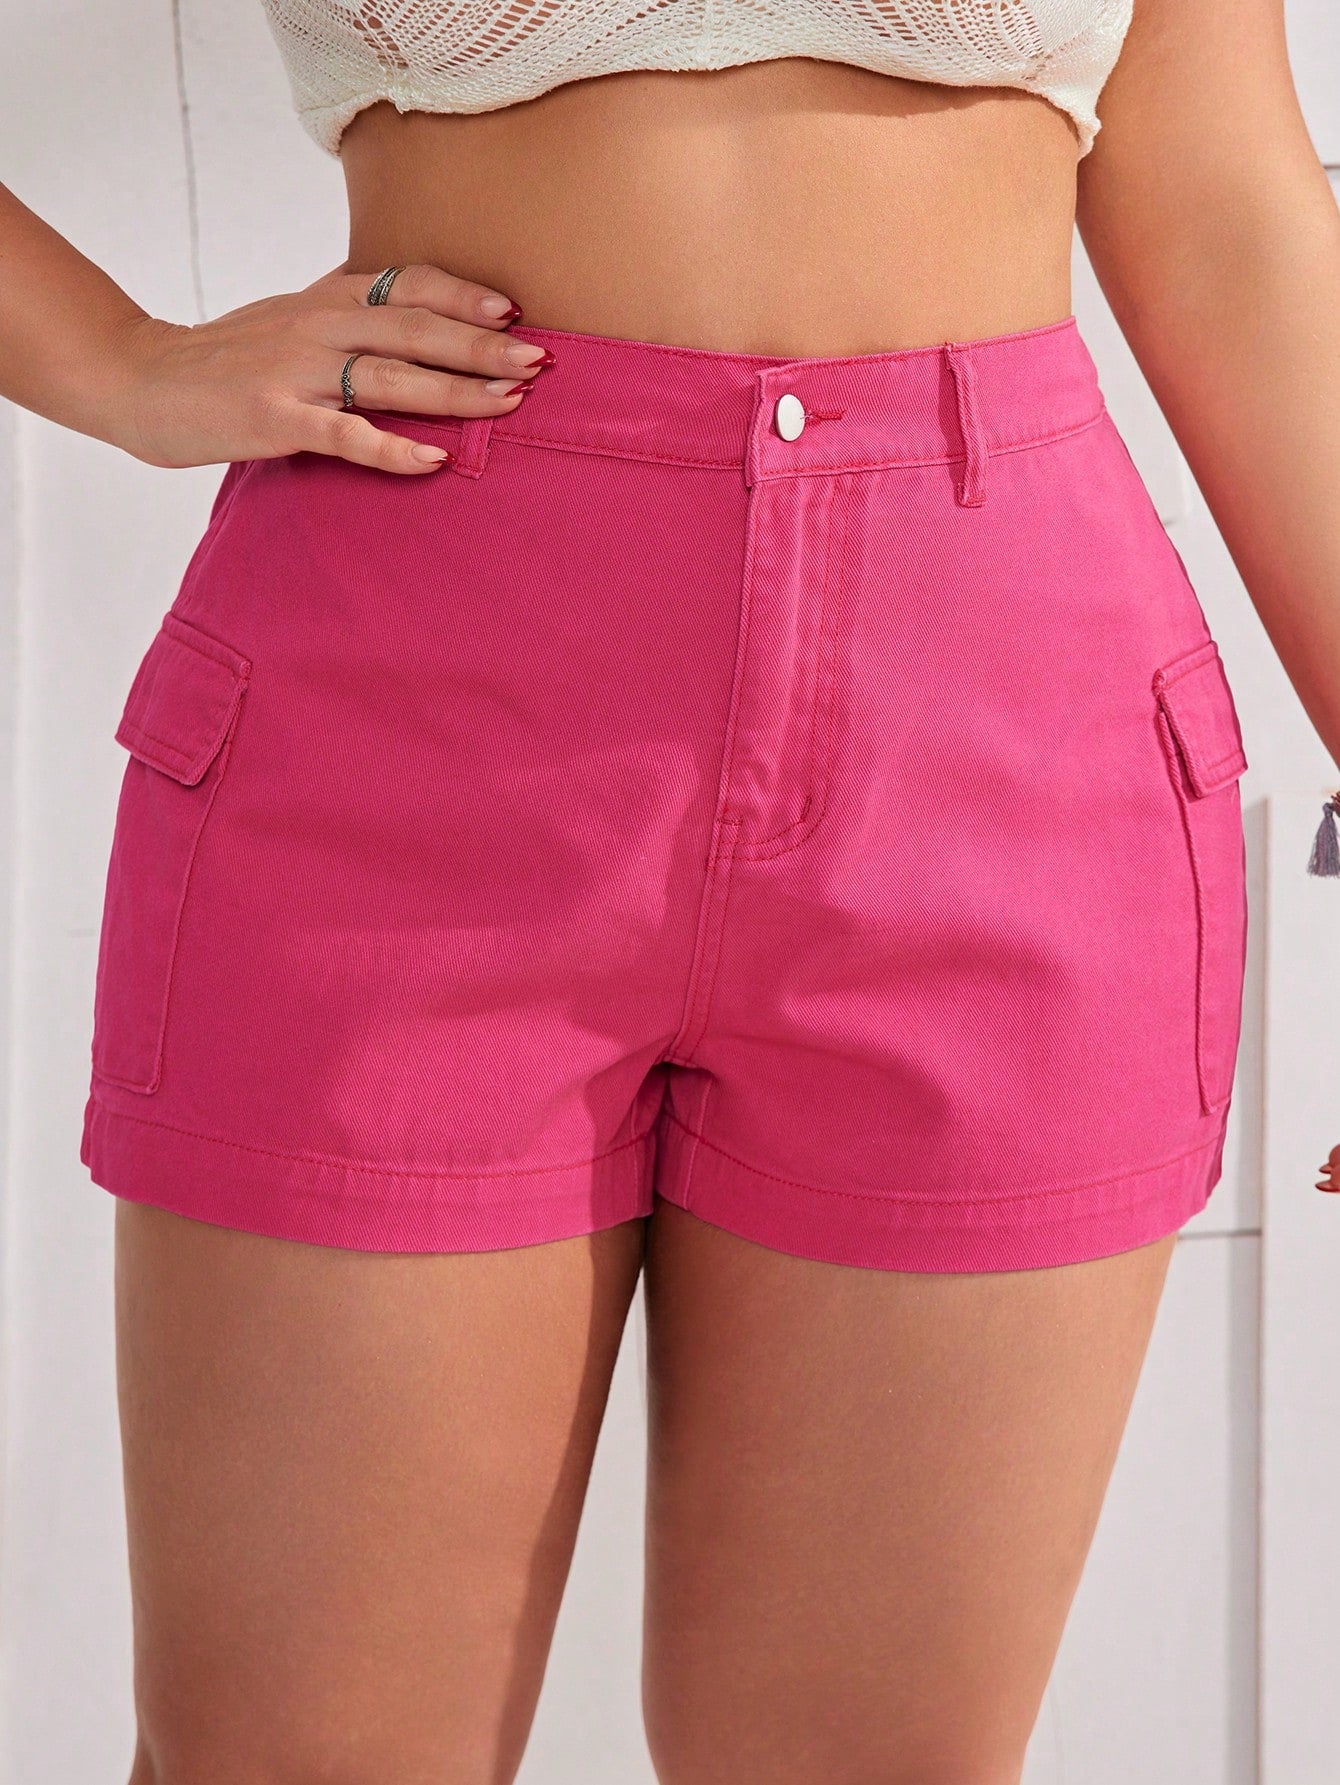 Plus Size Women's Cargo Style Denim Shorts With Pockets